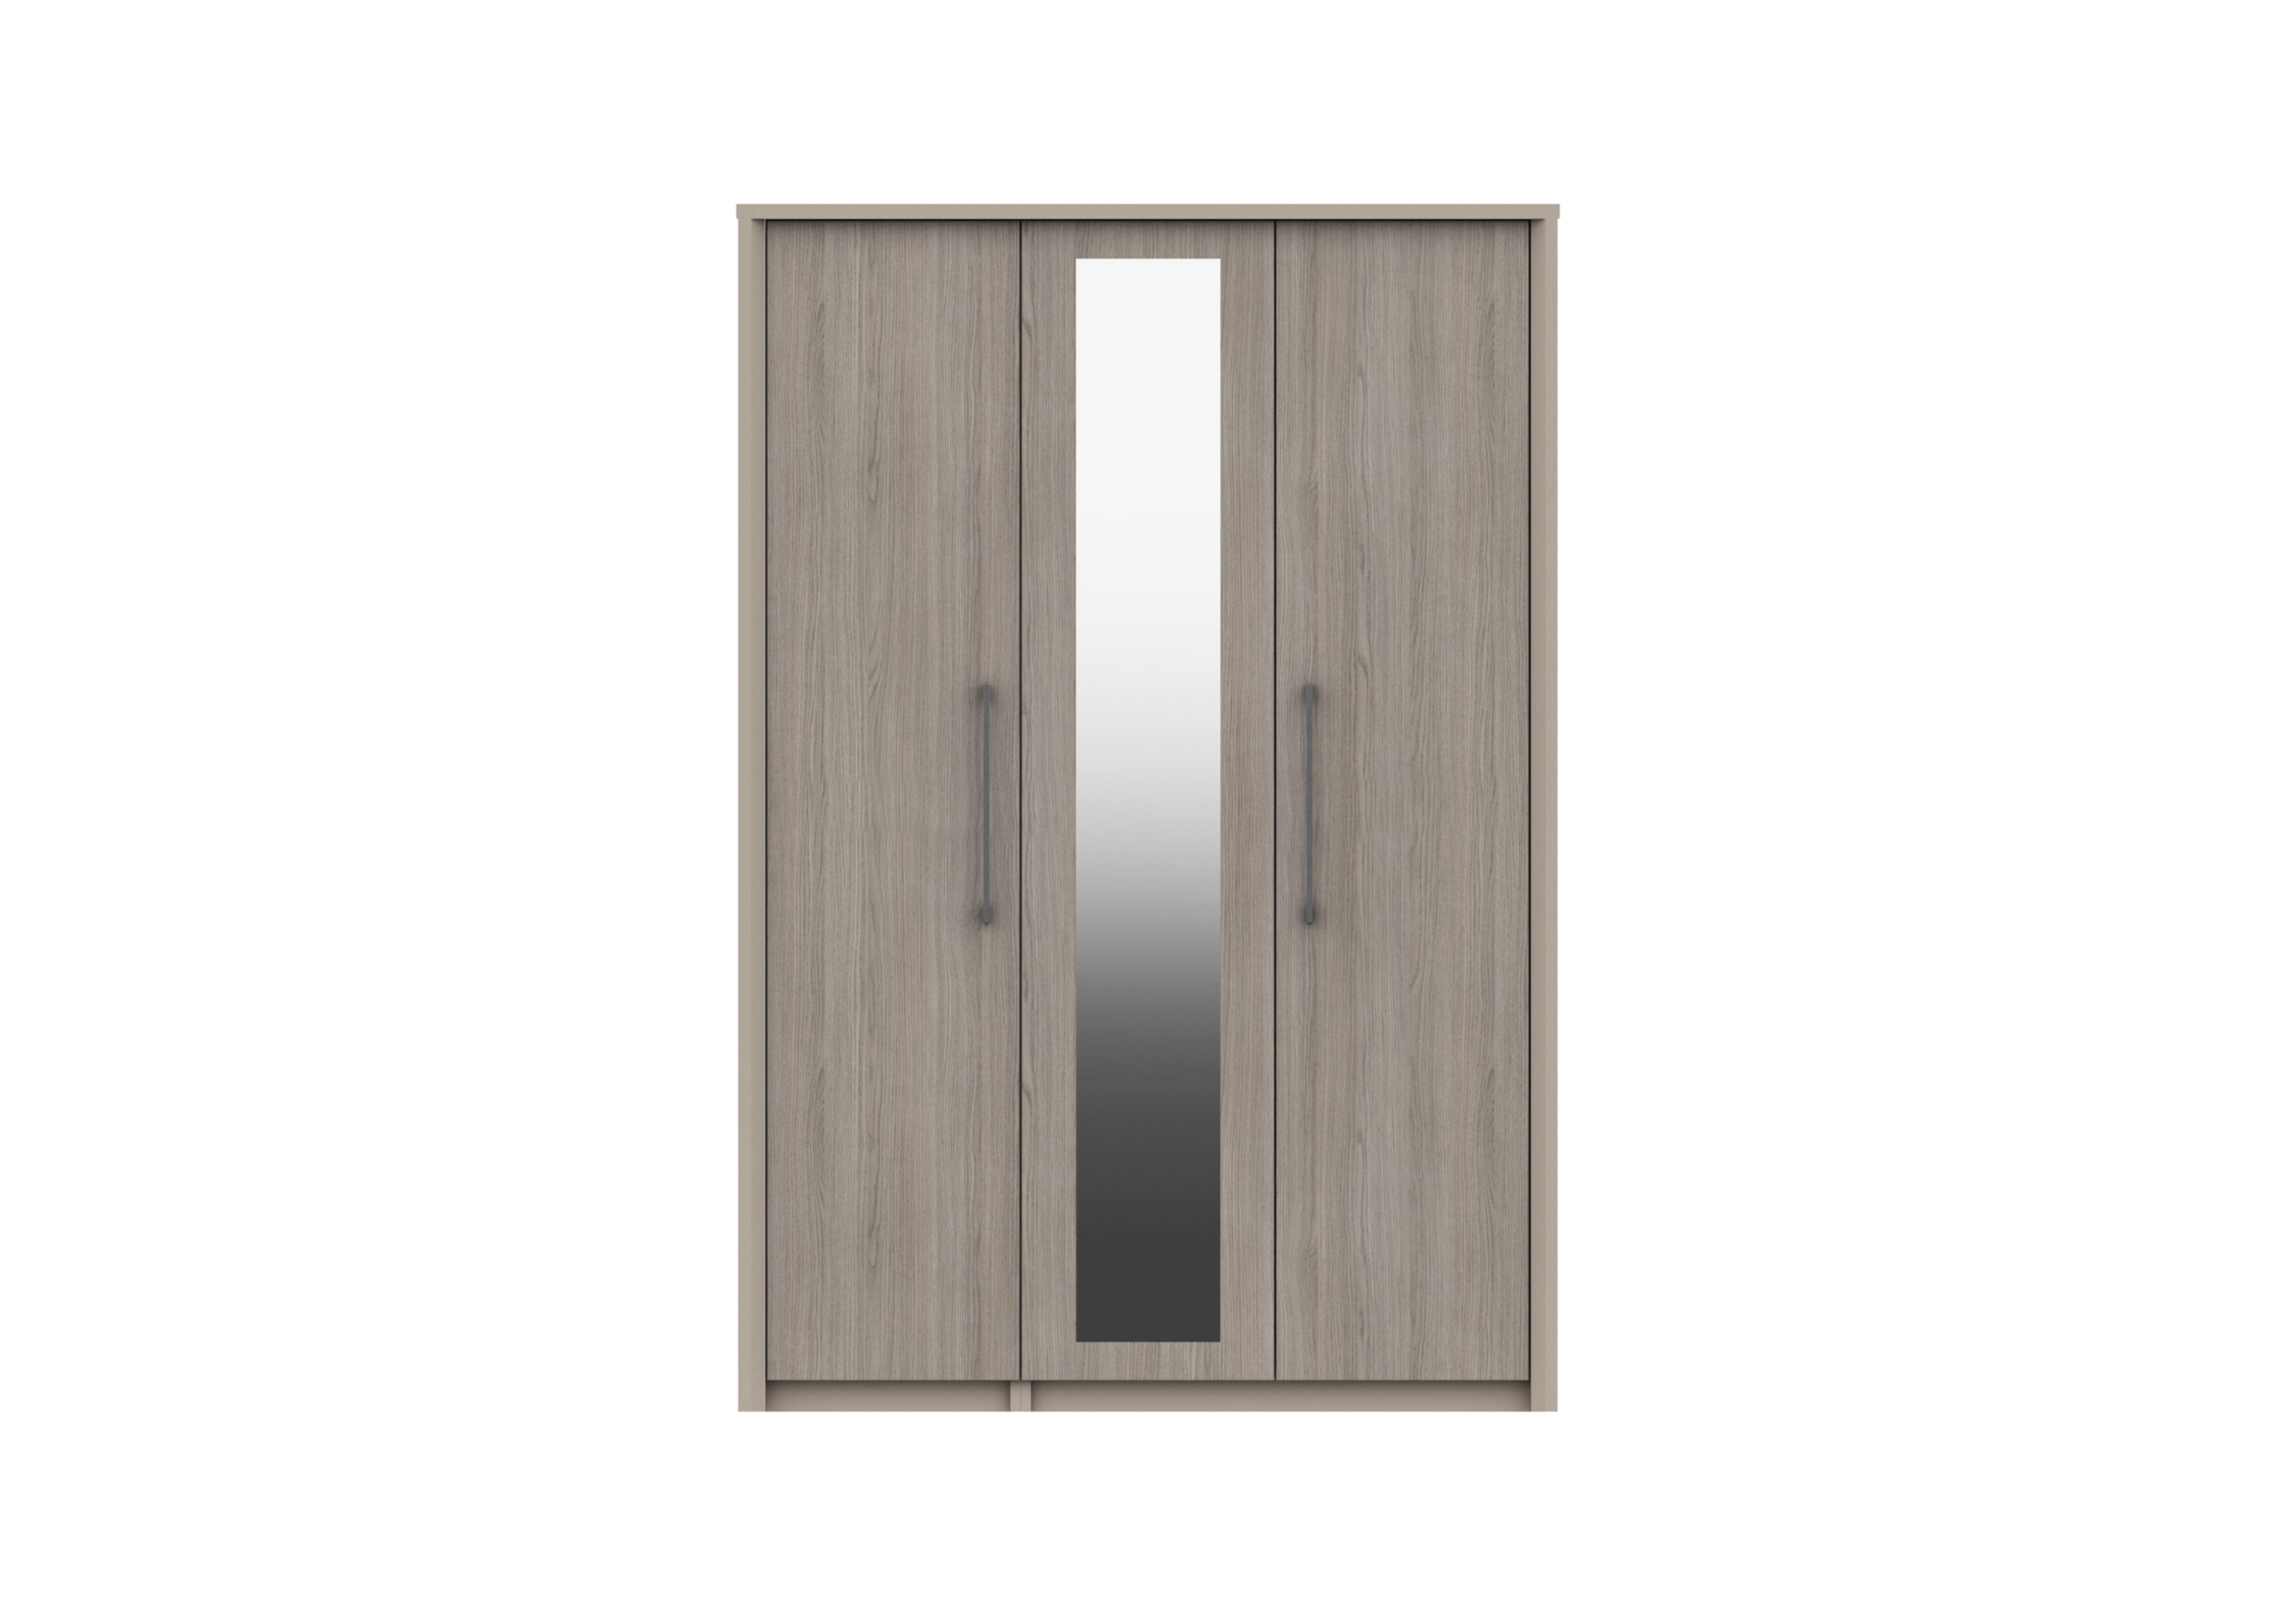 Paddington 3 Door Wardrobe with Mirror in Fired Earth/Grey Oak on Furniture Village